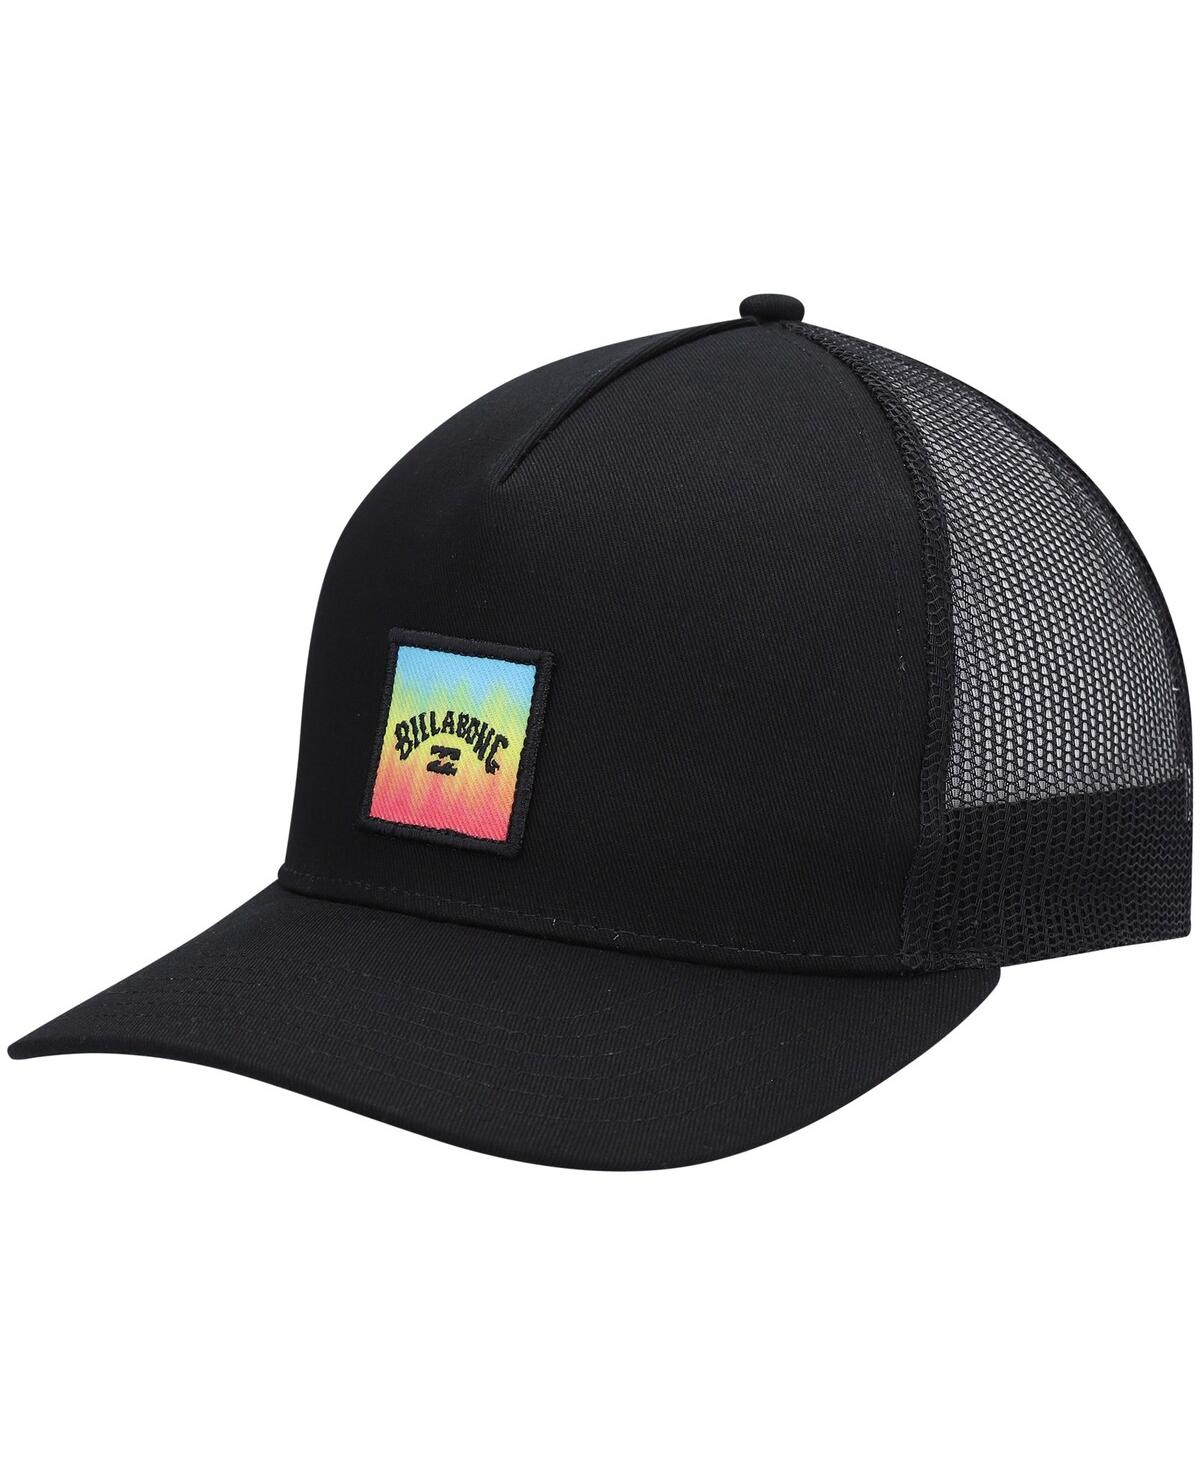 Men's Billabong Black Logo Stacked Trucker Snapback Hat - Black